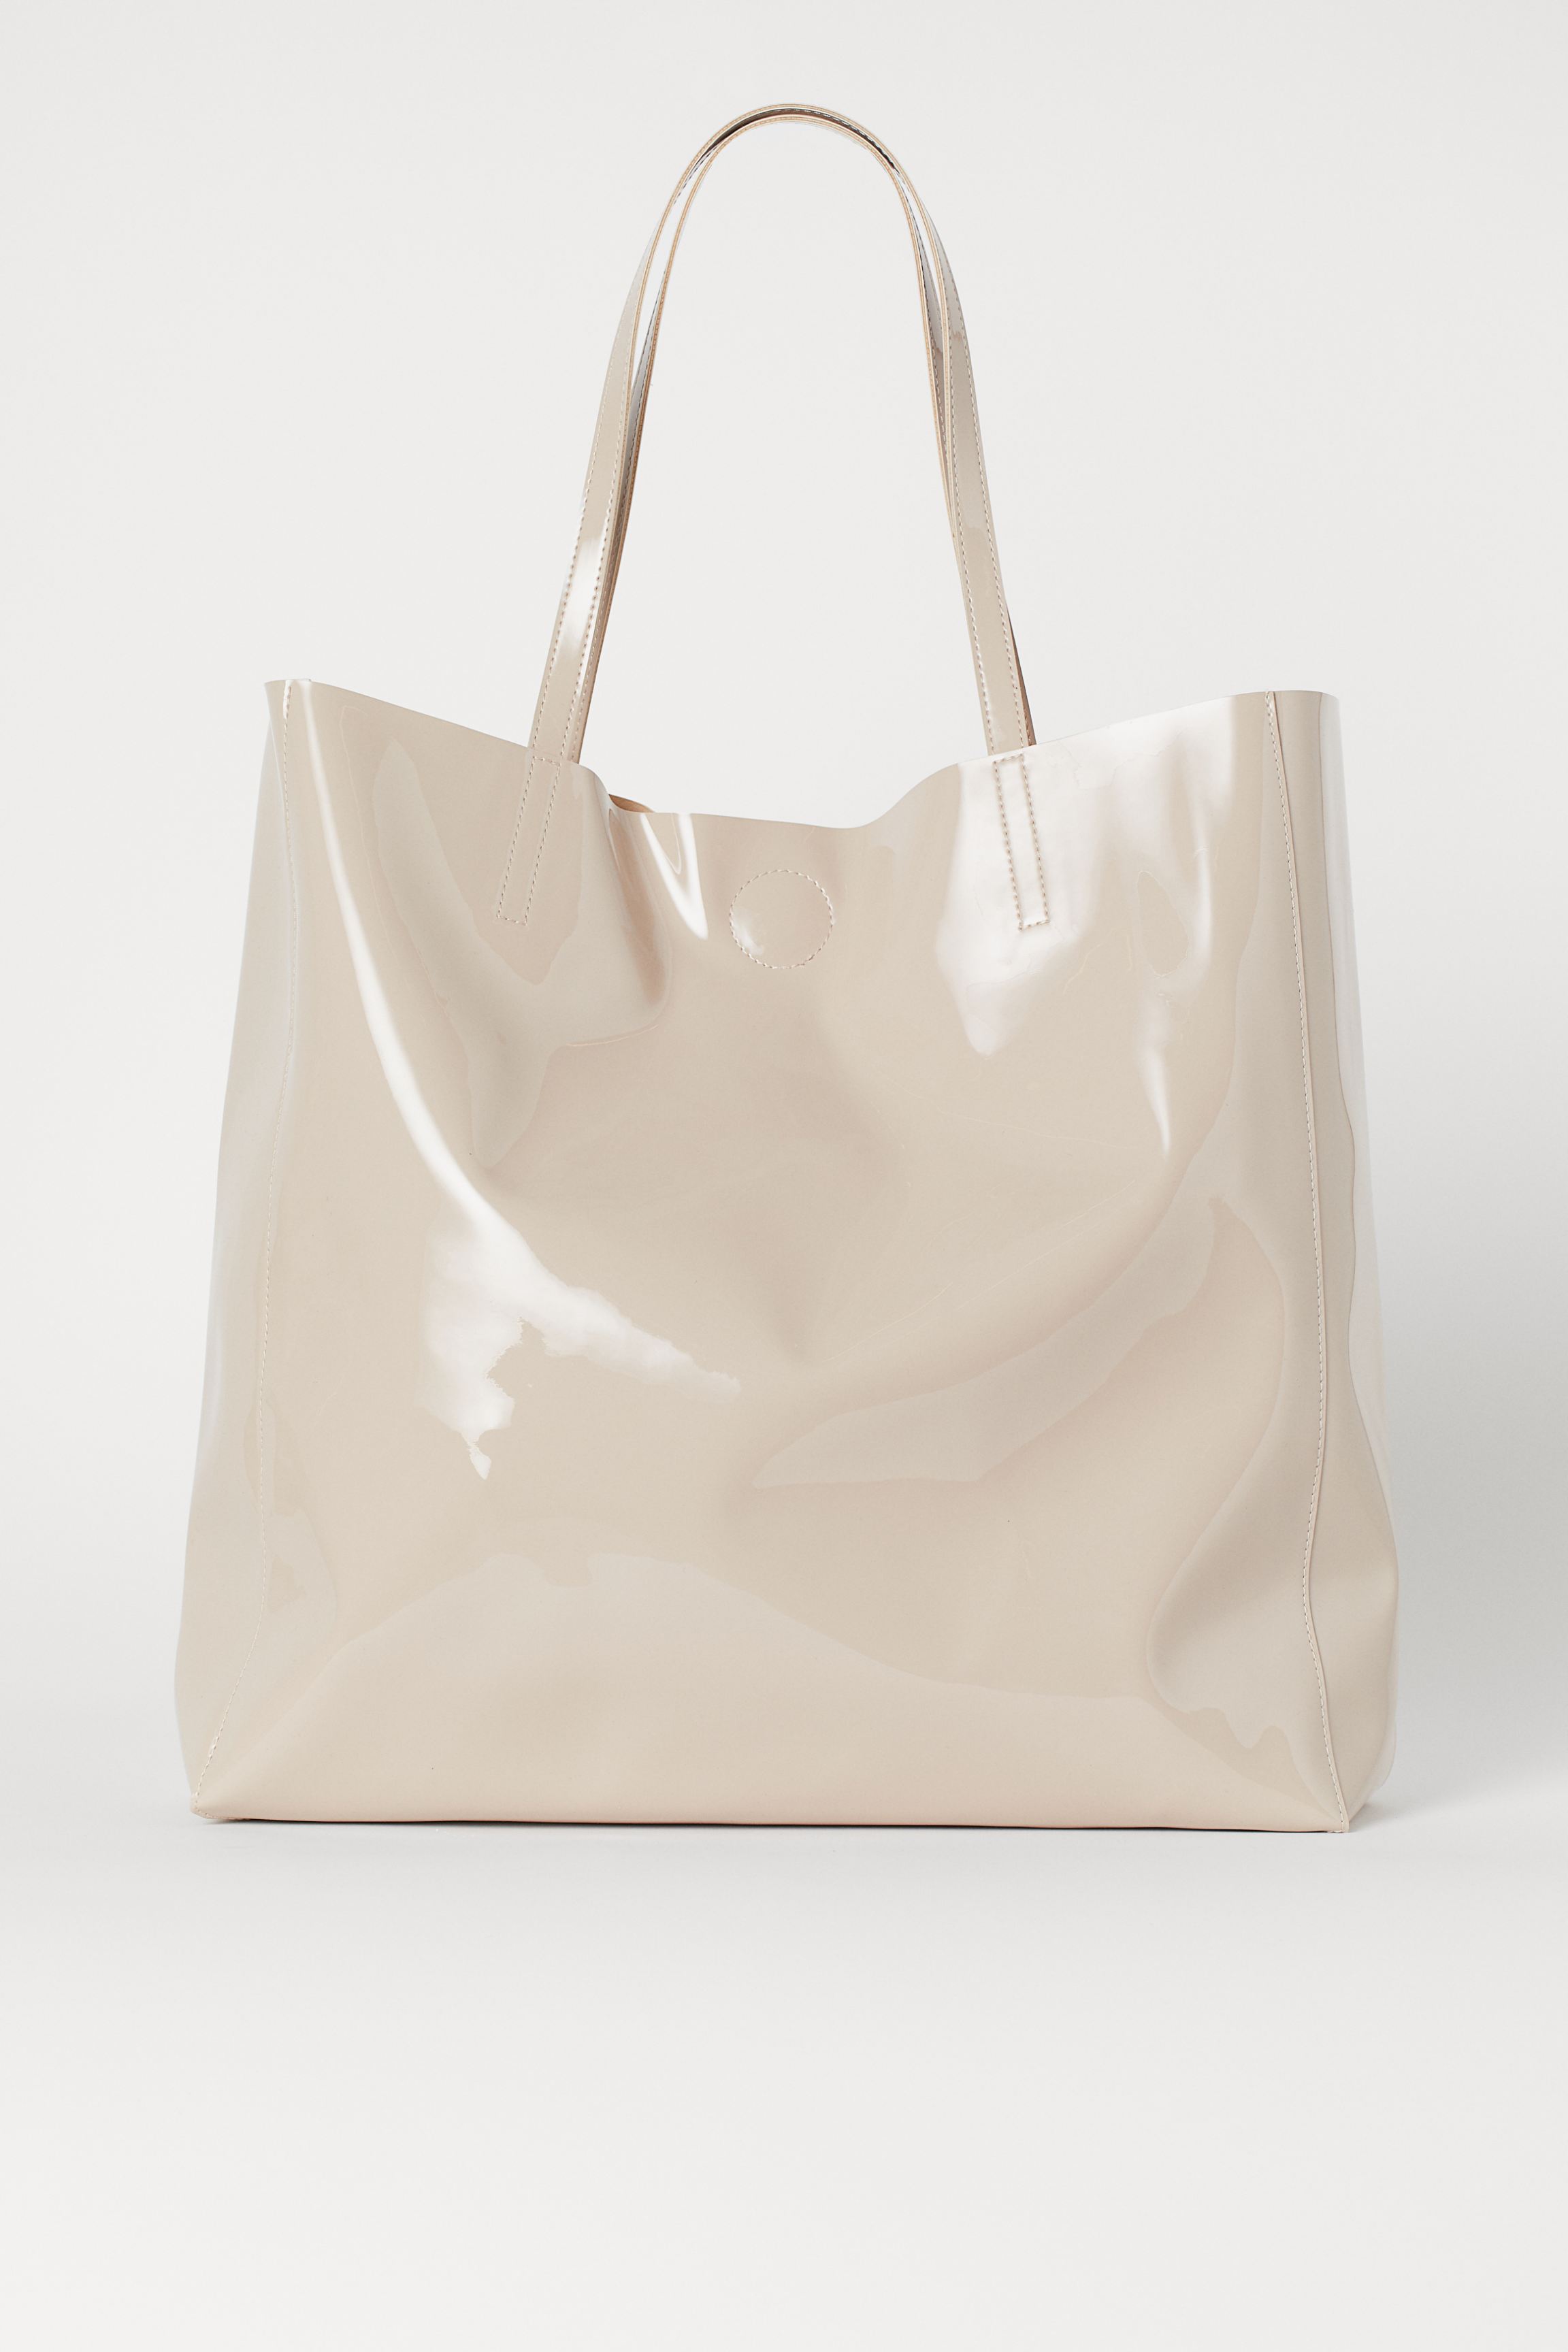 Levoberg Women Canvas Handbag Lovely Cat Big Tote Bag Shoulder Bags Large Casual Shopping Bag